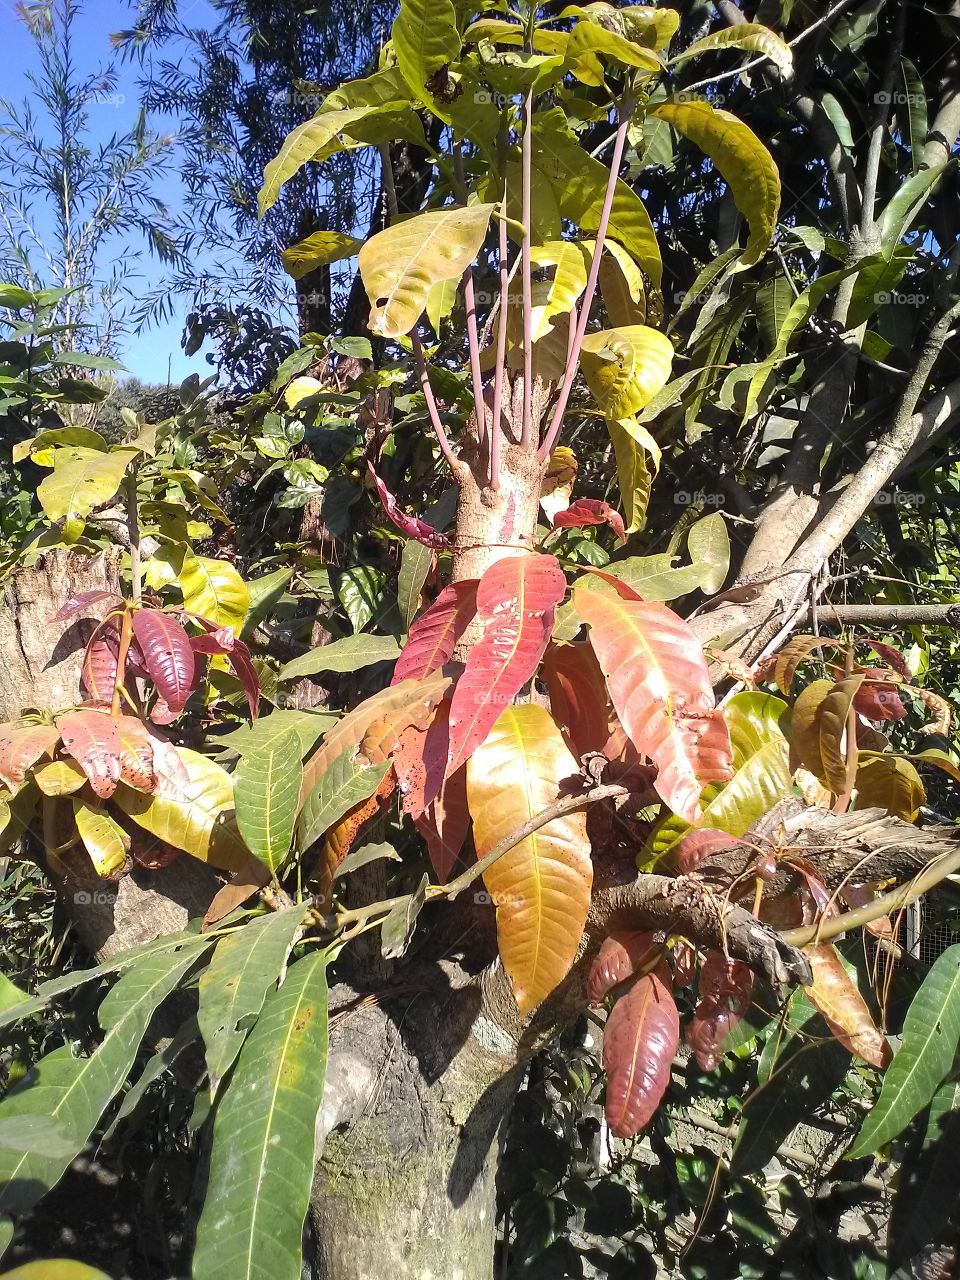 mango tree suffers torment